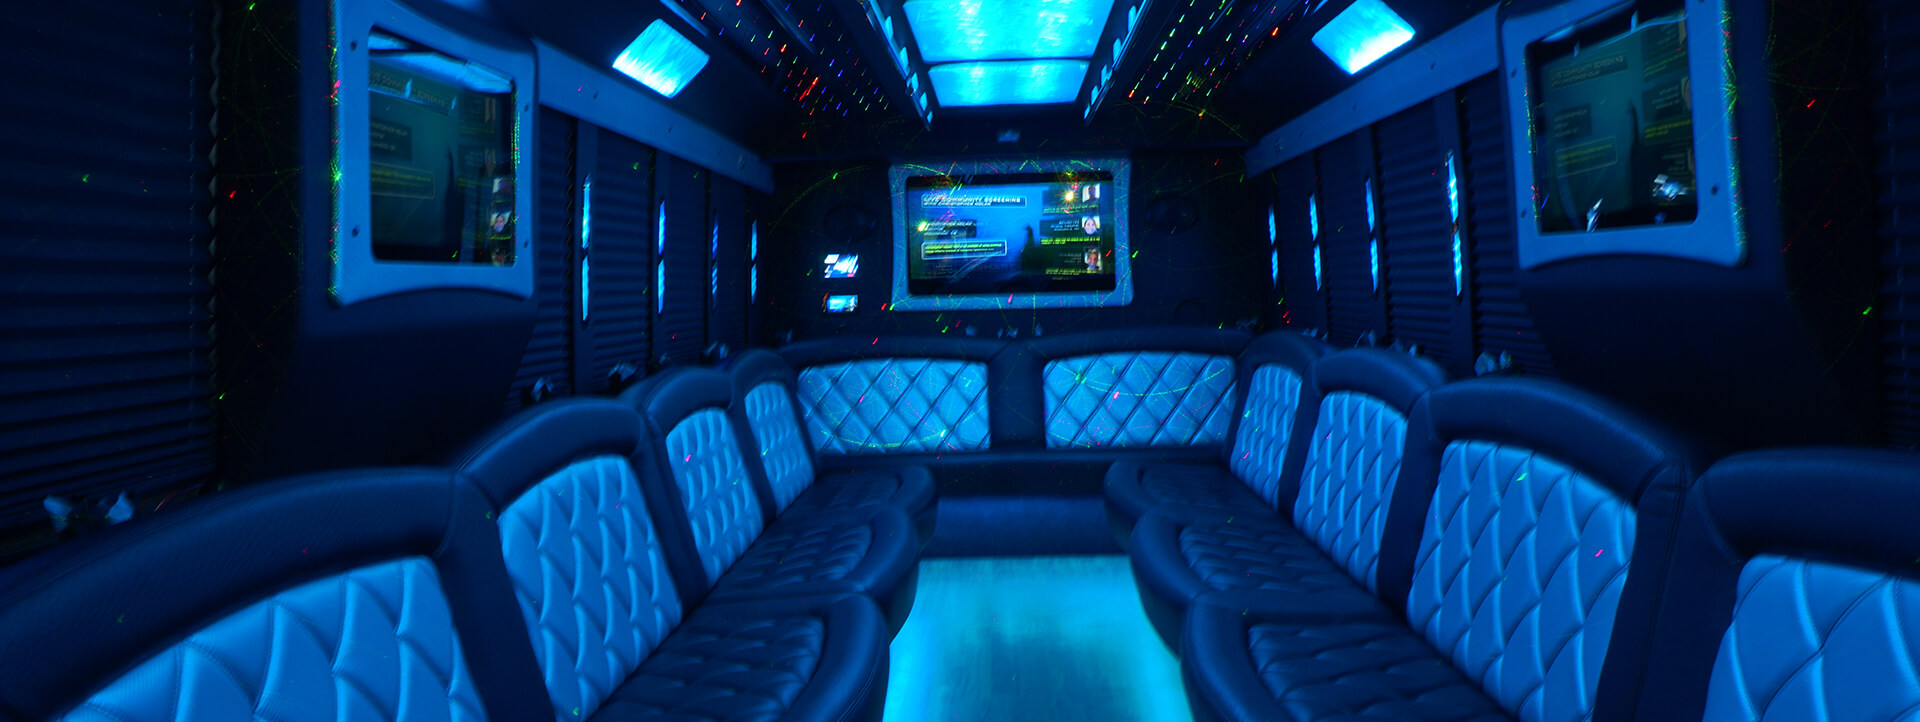 Vineland NJ, limo bus interior